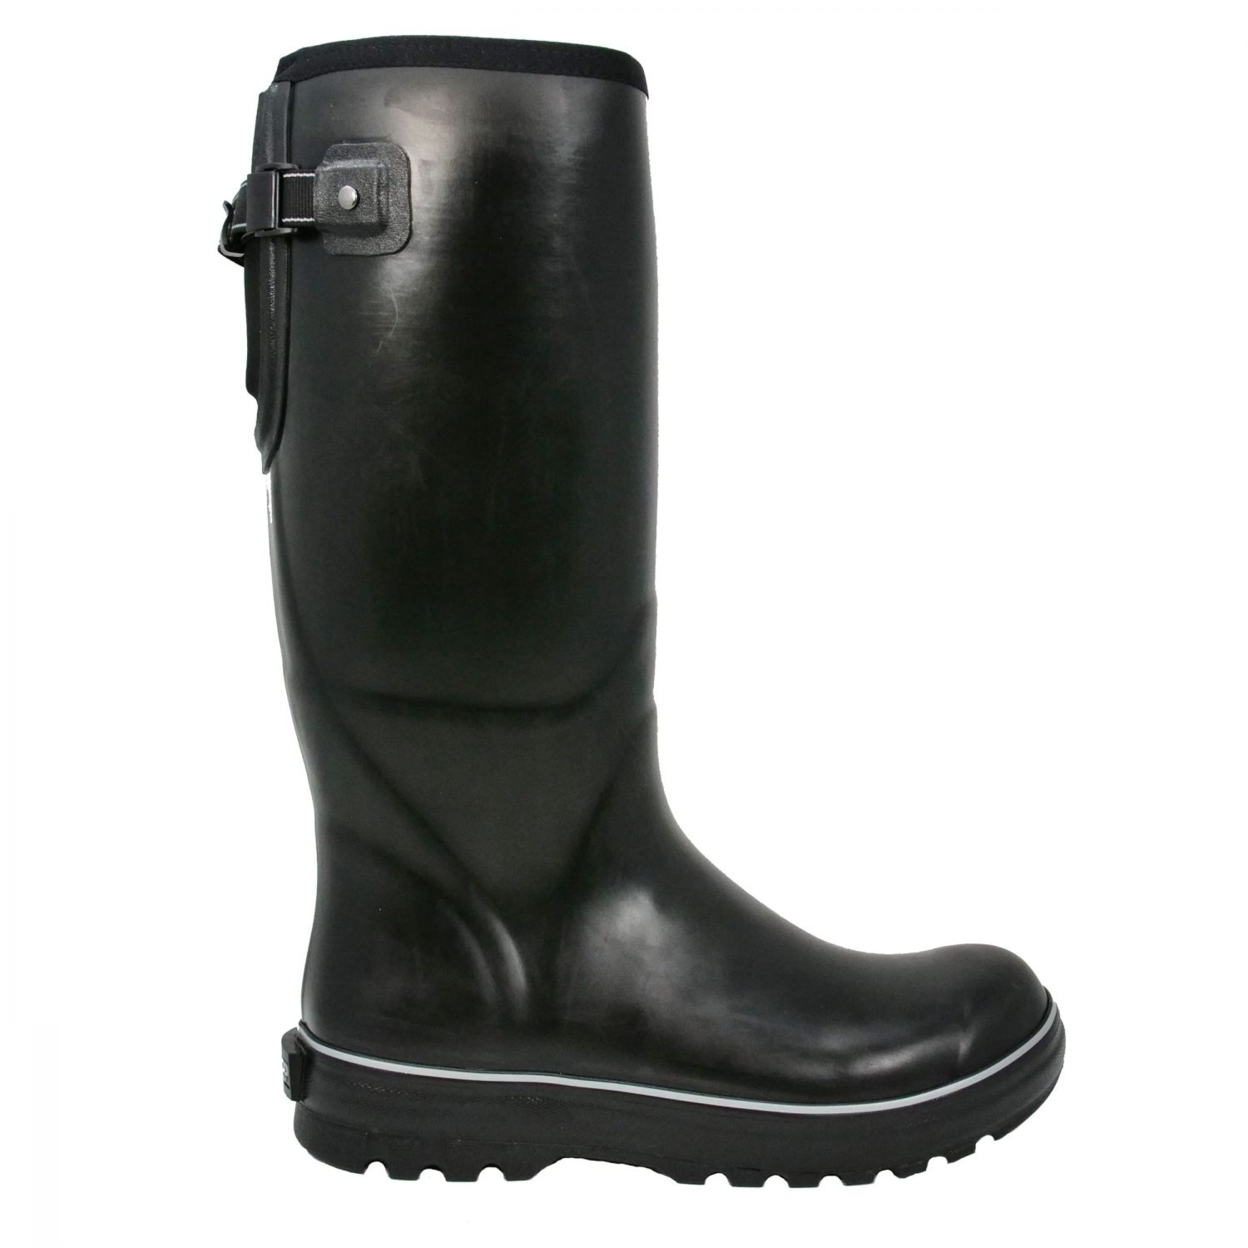 Dryshod Men's Mudslinger Gusset Premium Rubber Farm Boots Black/Grey - MDG-MH-BK ONE SIZE BLACK/GREY - BLACK/GREY, 10